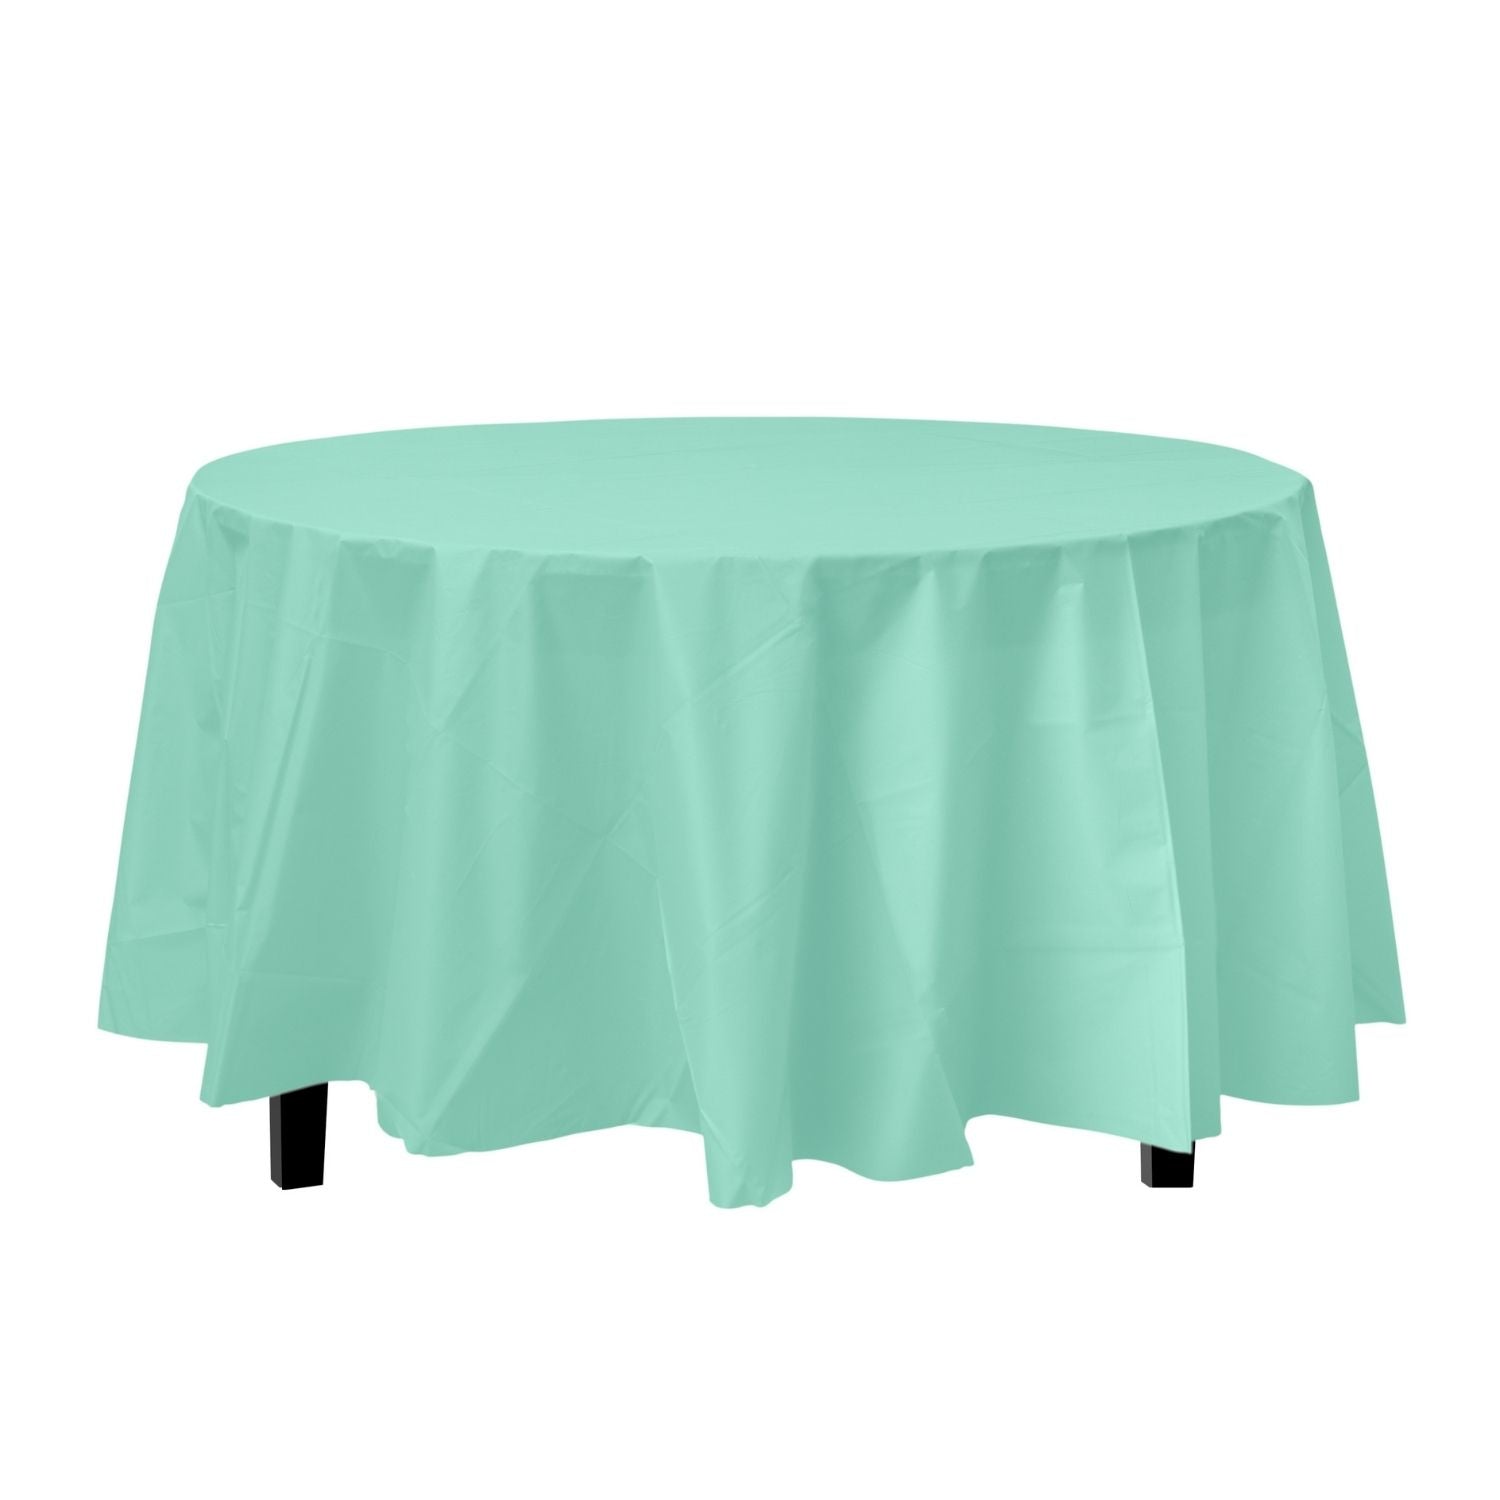 Premium Round Mint Plastic Tablecloth | 96 Count - Yom Tov Settings